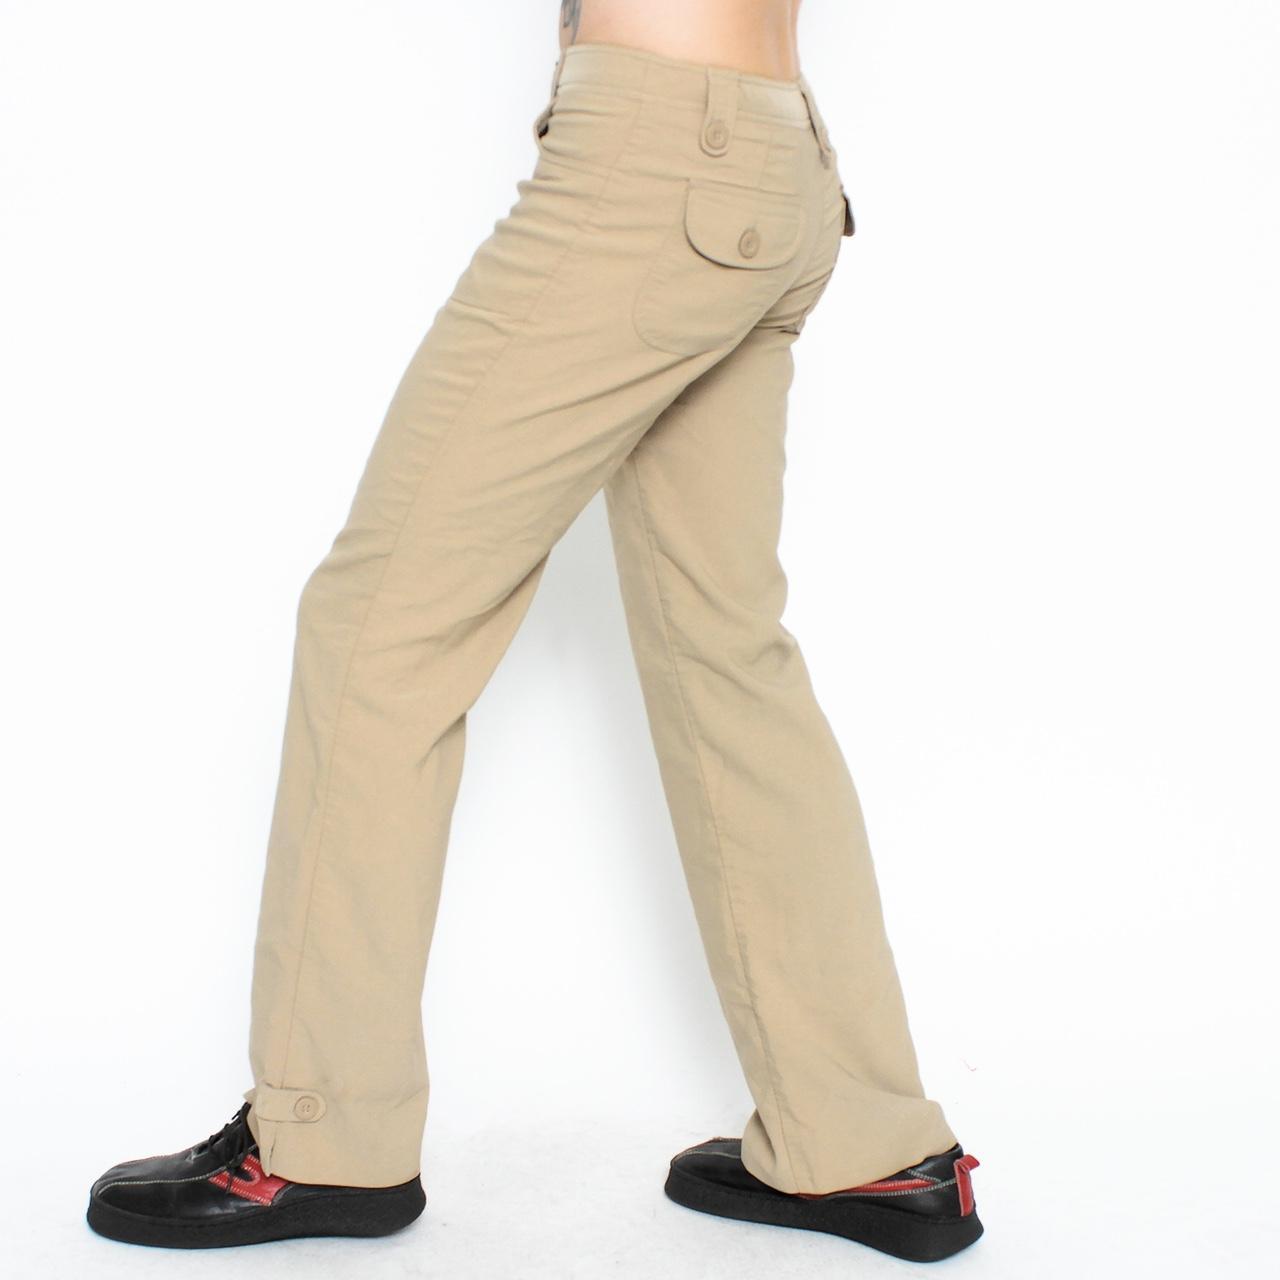 90s khaki pants by No Boundaries. Khaki tan fabric